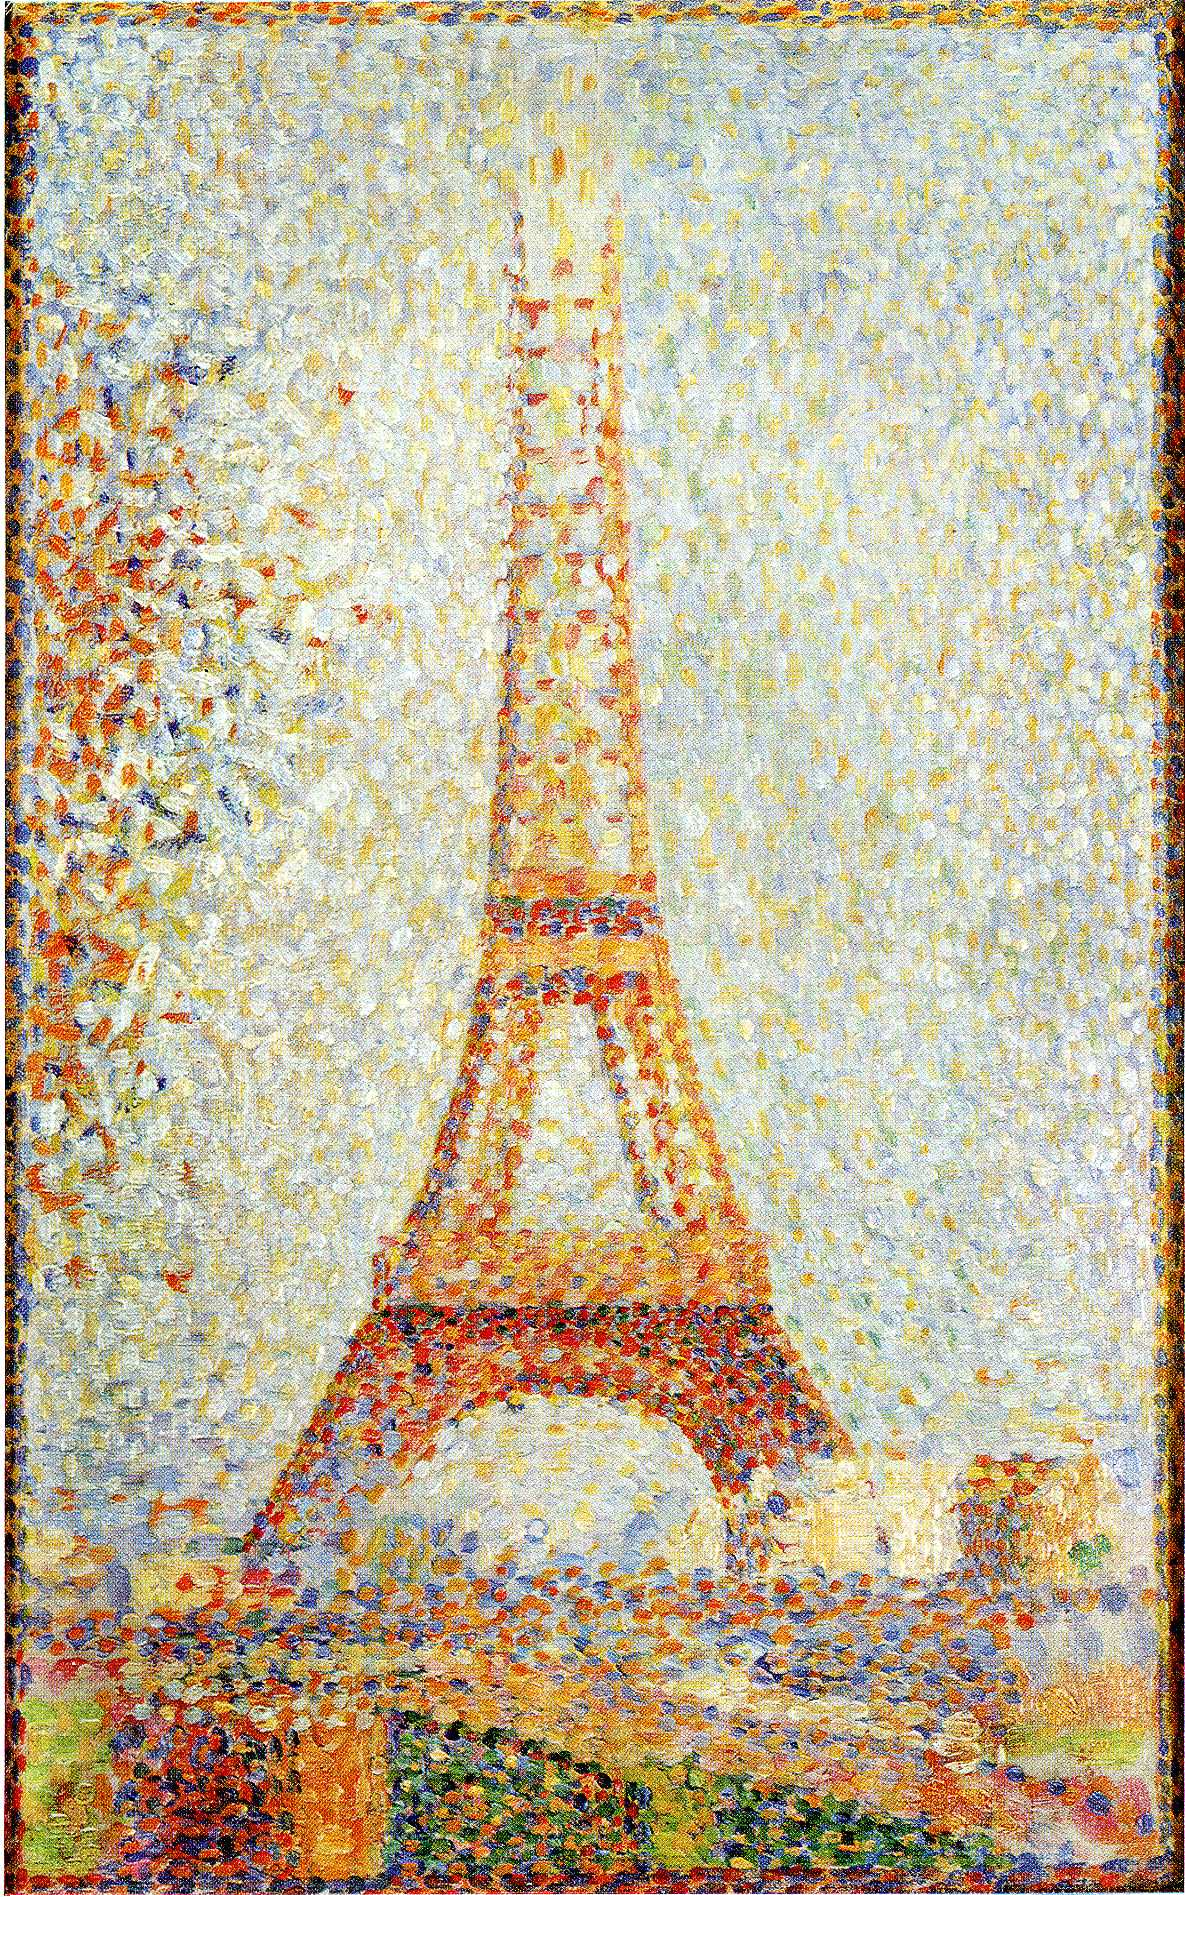 La Torre Eiffel by Georges Seurat - 1889 - 24 x 15 cm 